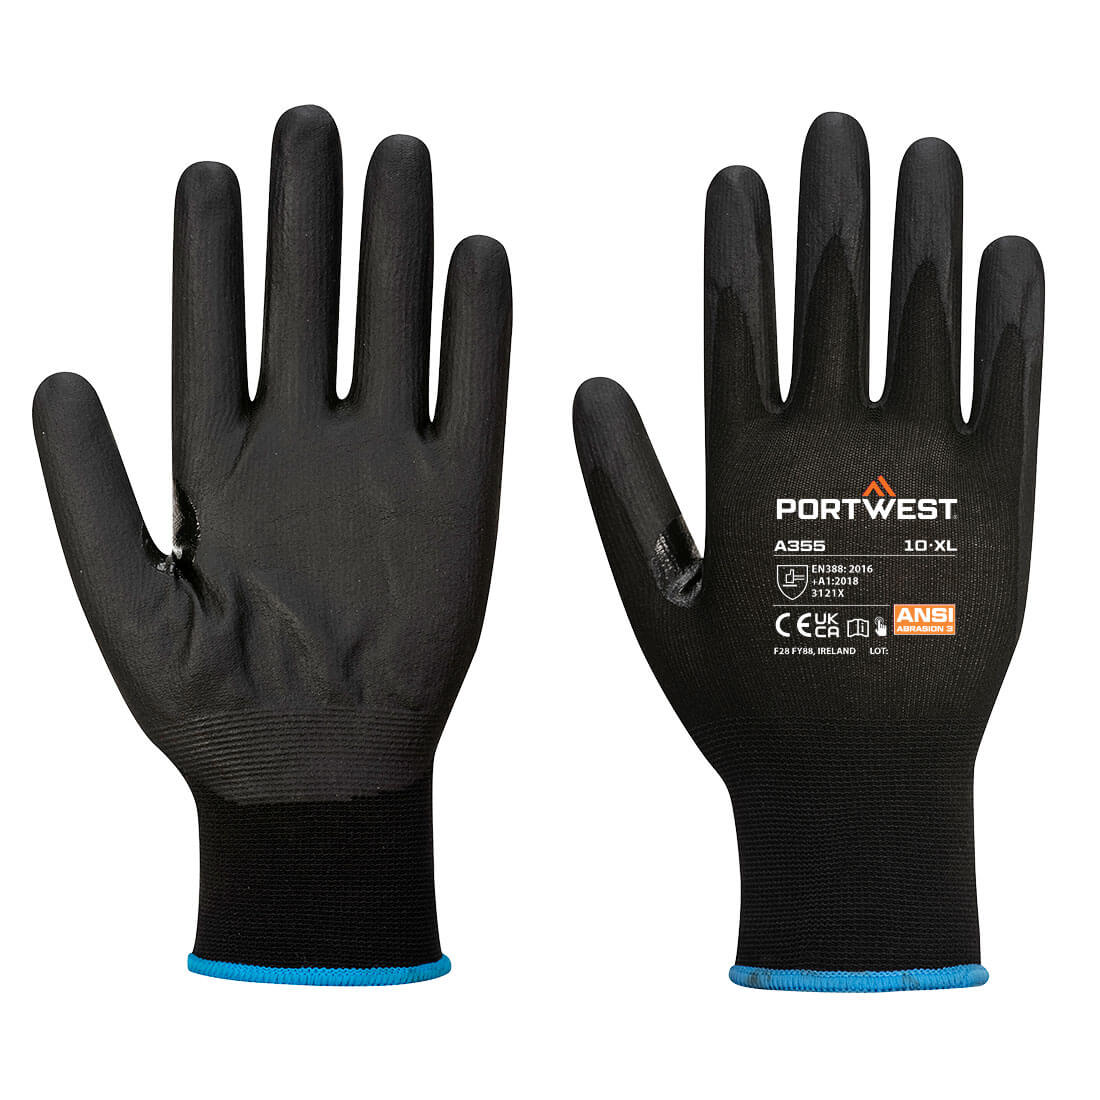 Portwest NPR15 Nitrile Foam Touchscreen Glove PK12 (A355)